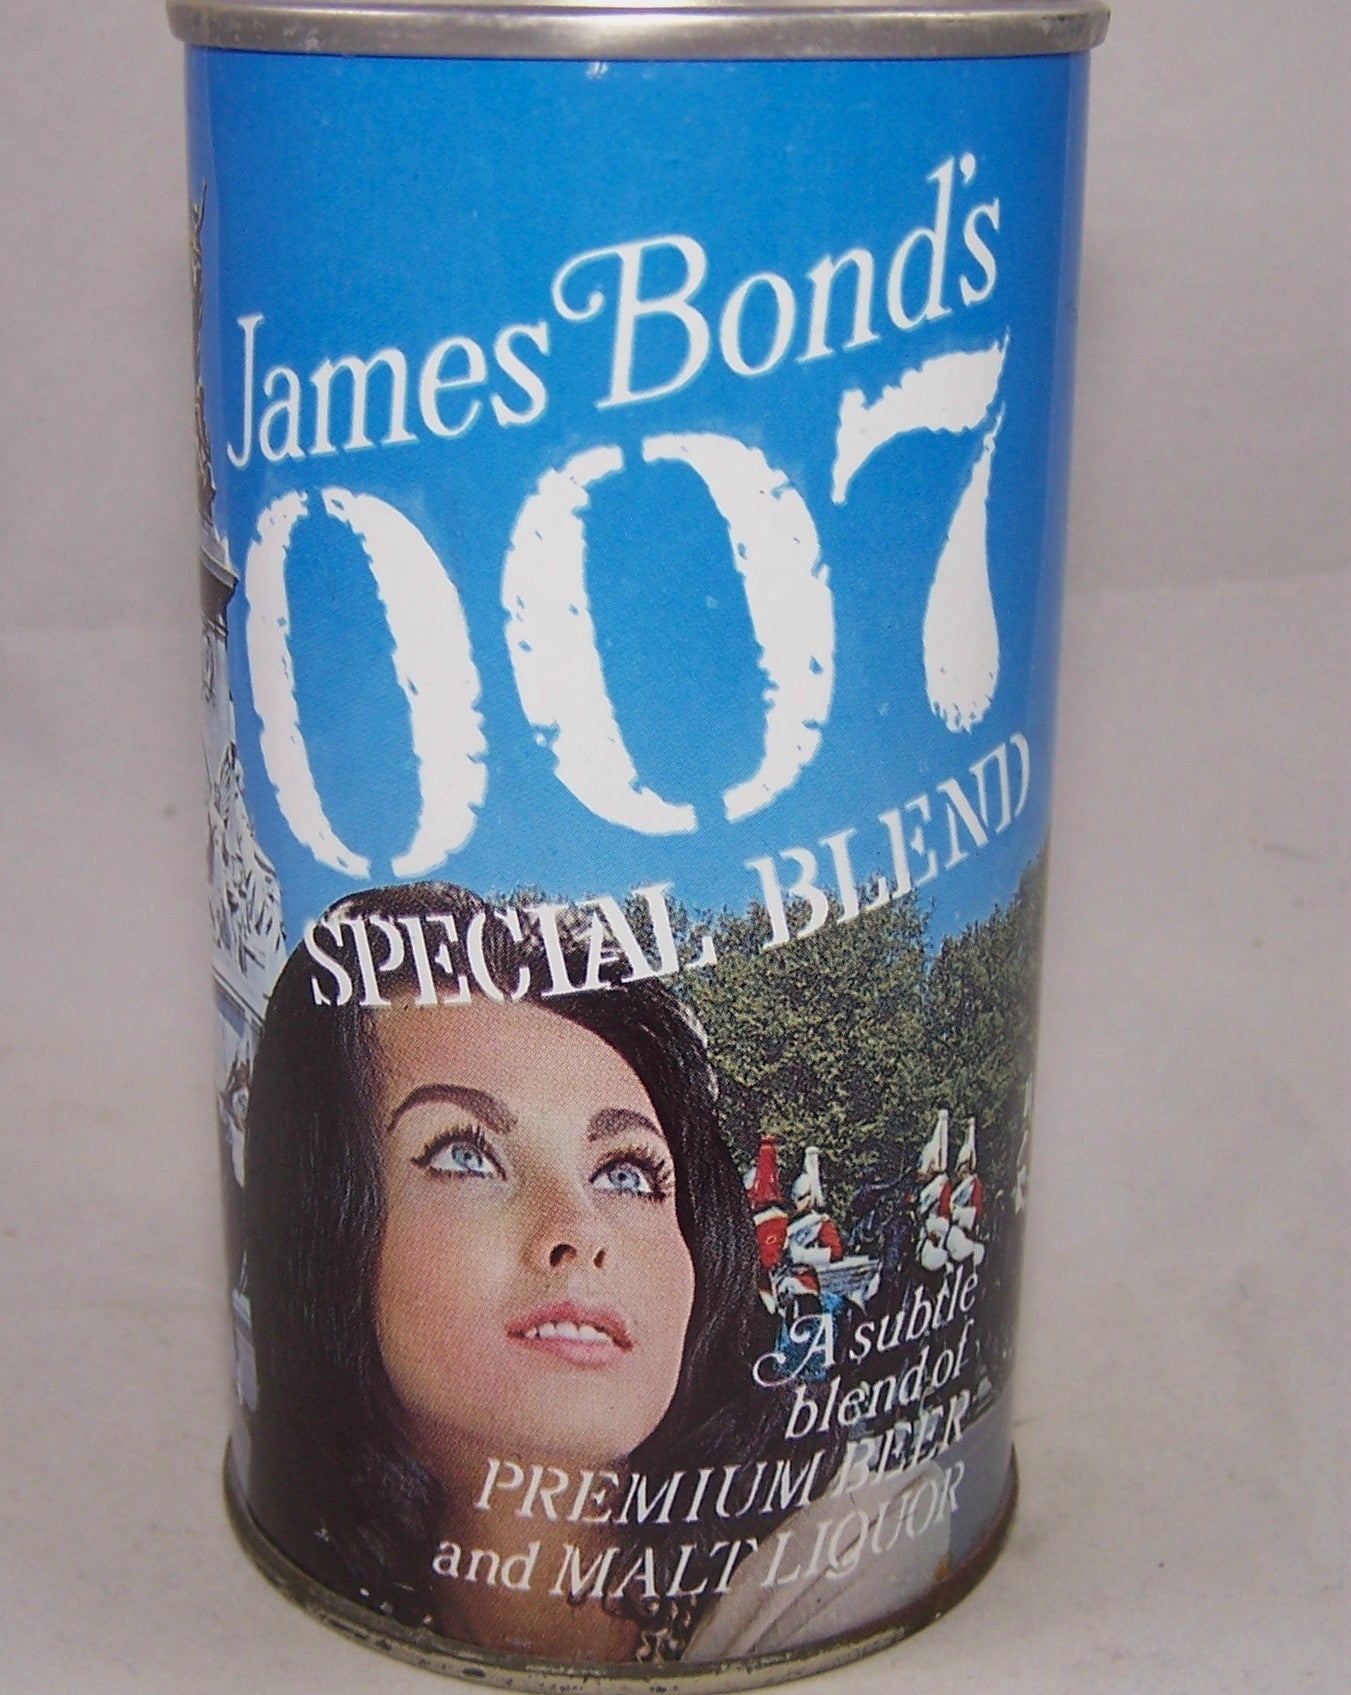 James Bond's 007 Special Blend, USBC II 82-33, Grade 1/1+ Sold on 02/09/17